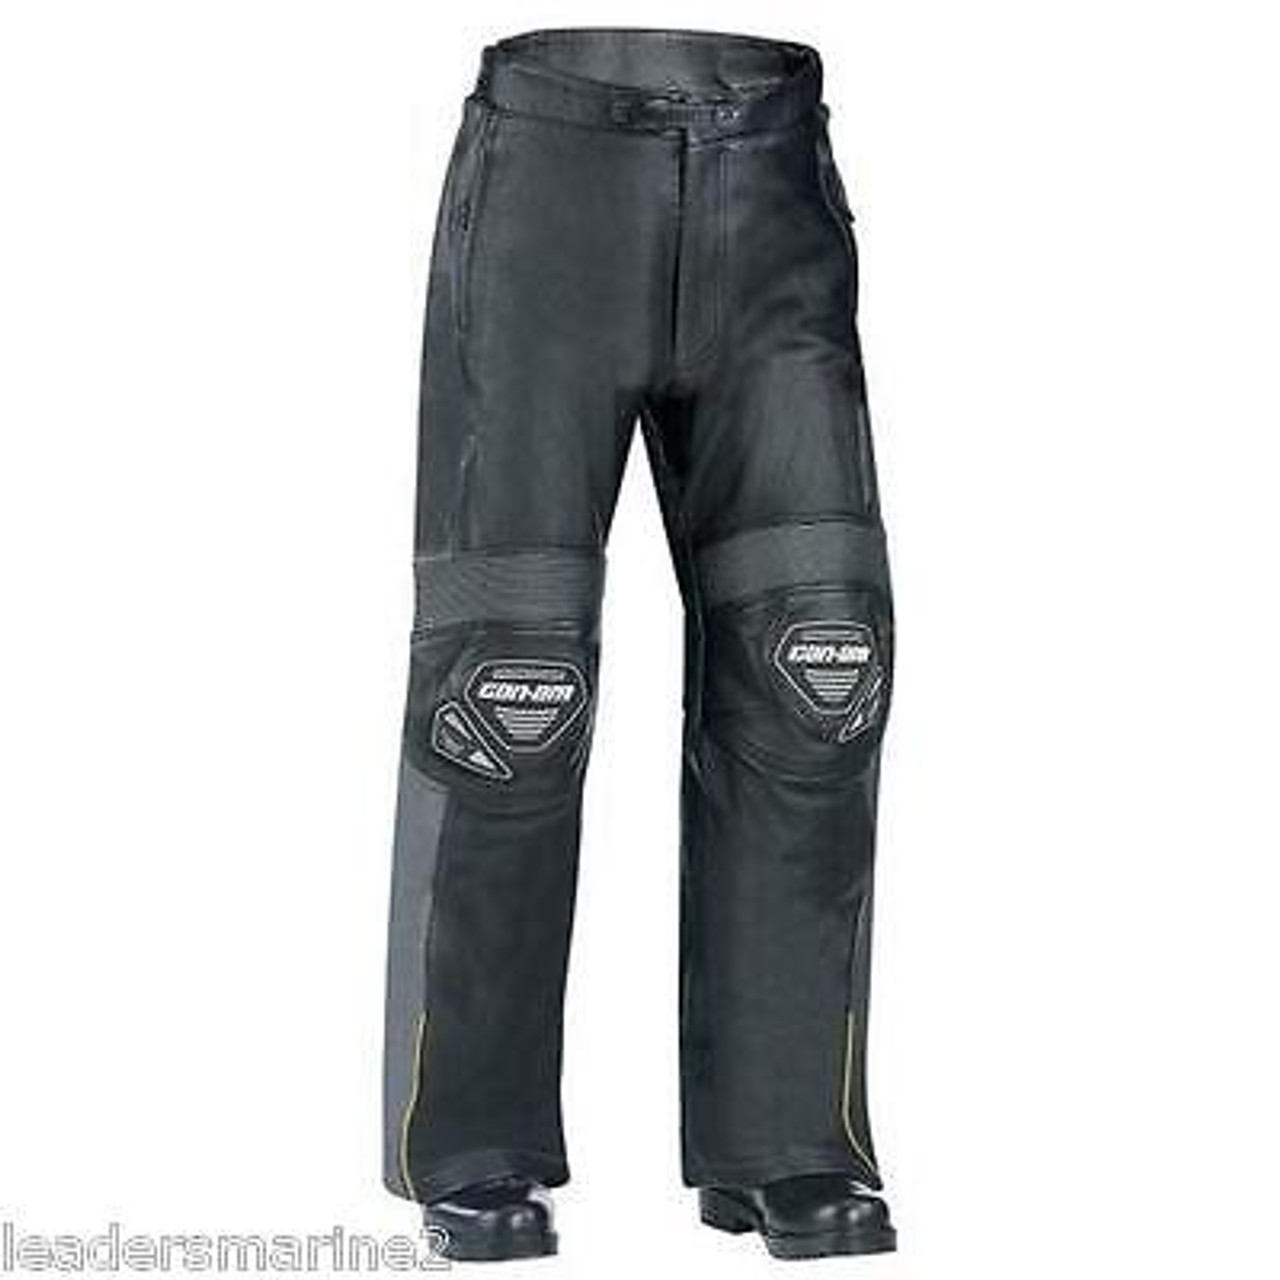 Can-Am Spyder Roadster New OEM Leather Pants Grey/Black 3XL Men's Riding XXXL